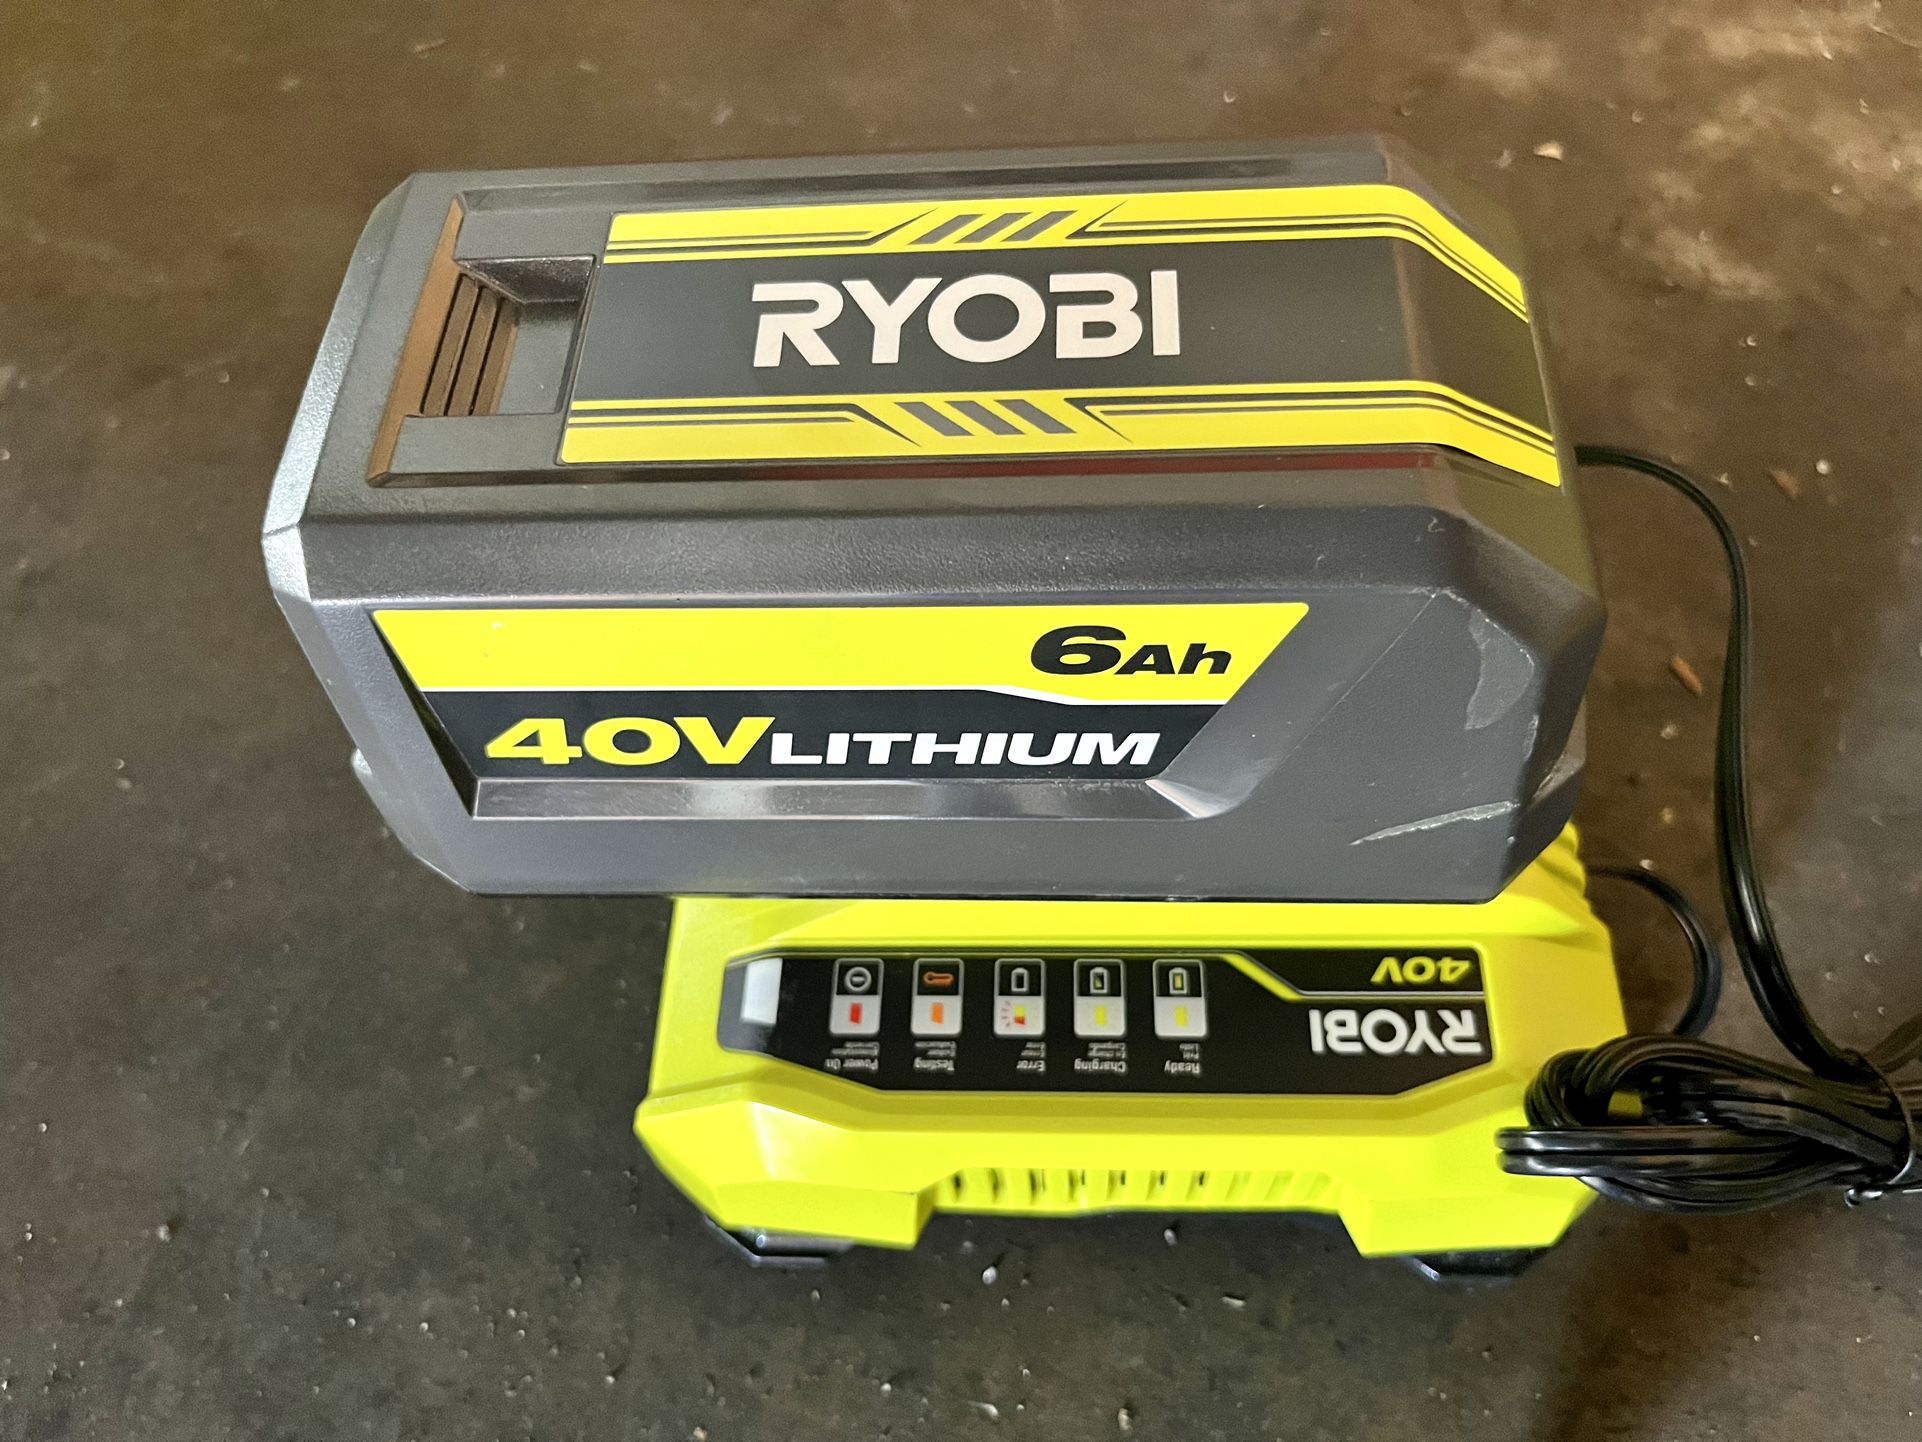 Ryobi 40V 6.0ah Battery & Fast Charger. 